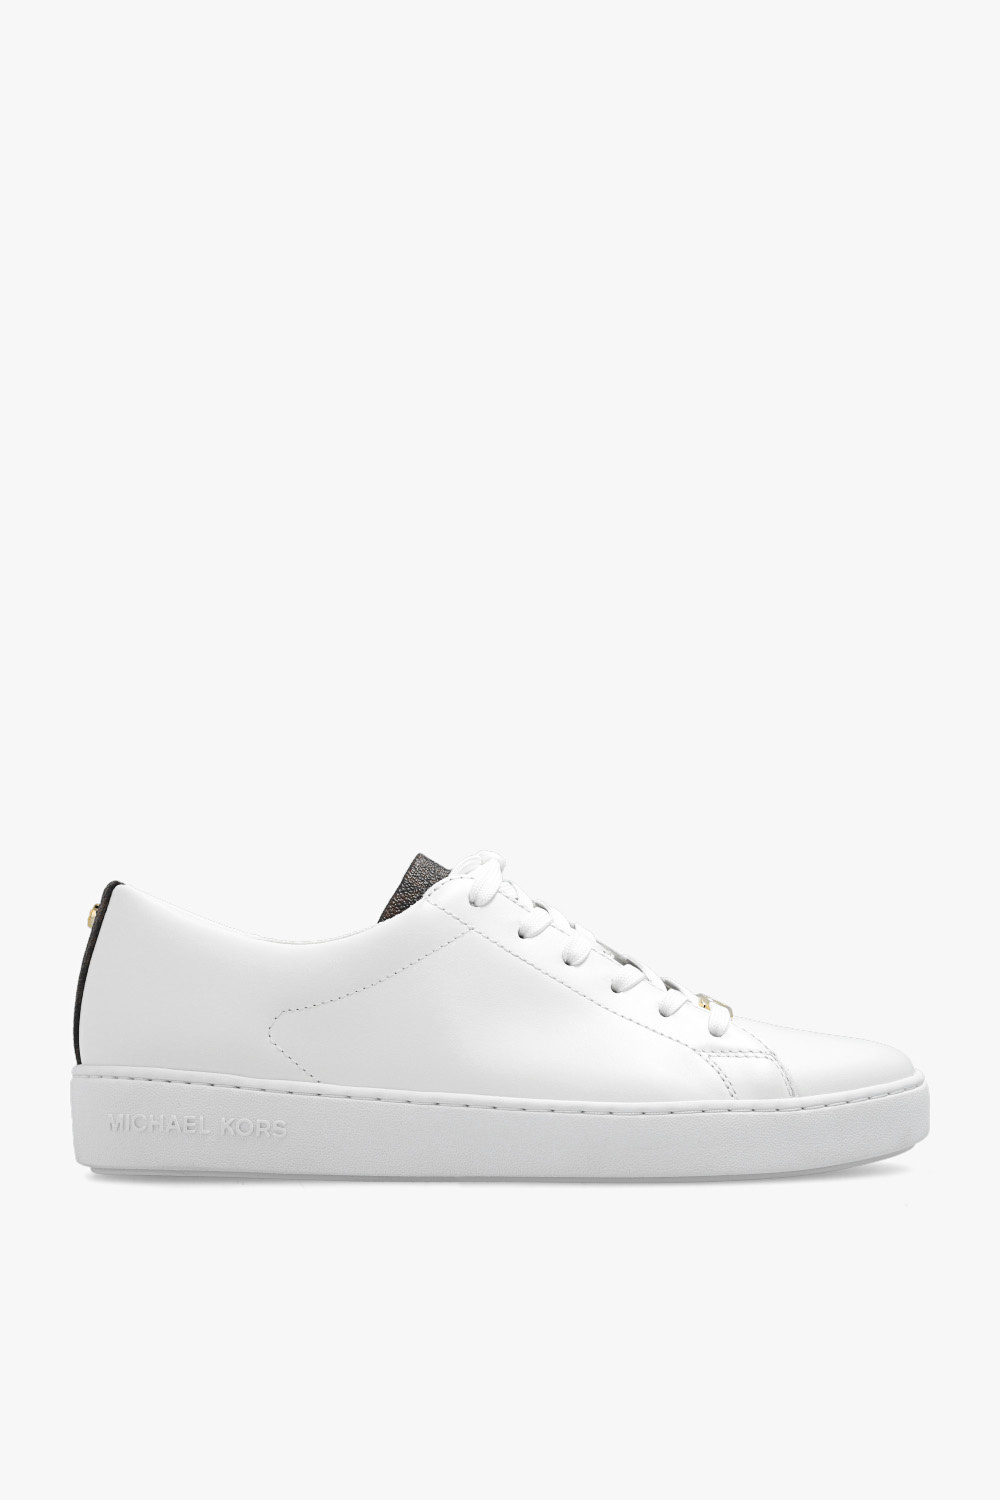 Michael Michael Kors ‘Keaton’ leather sneakers